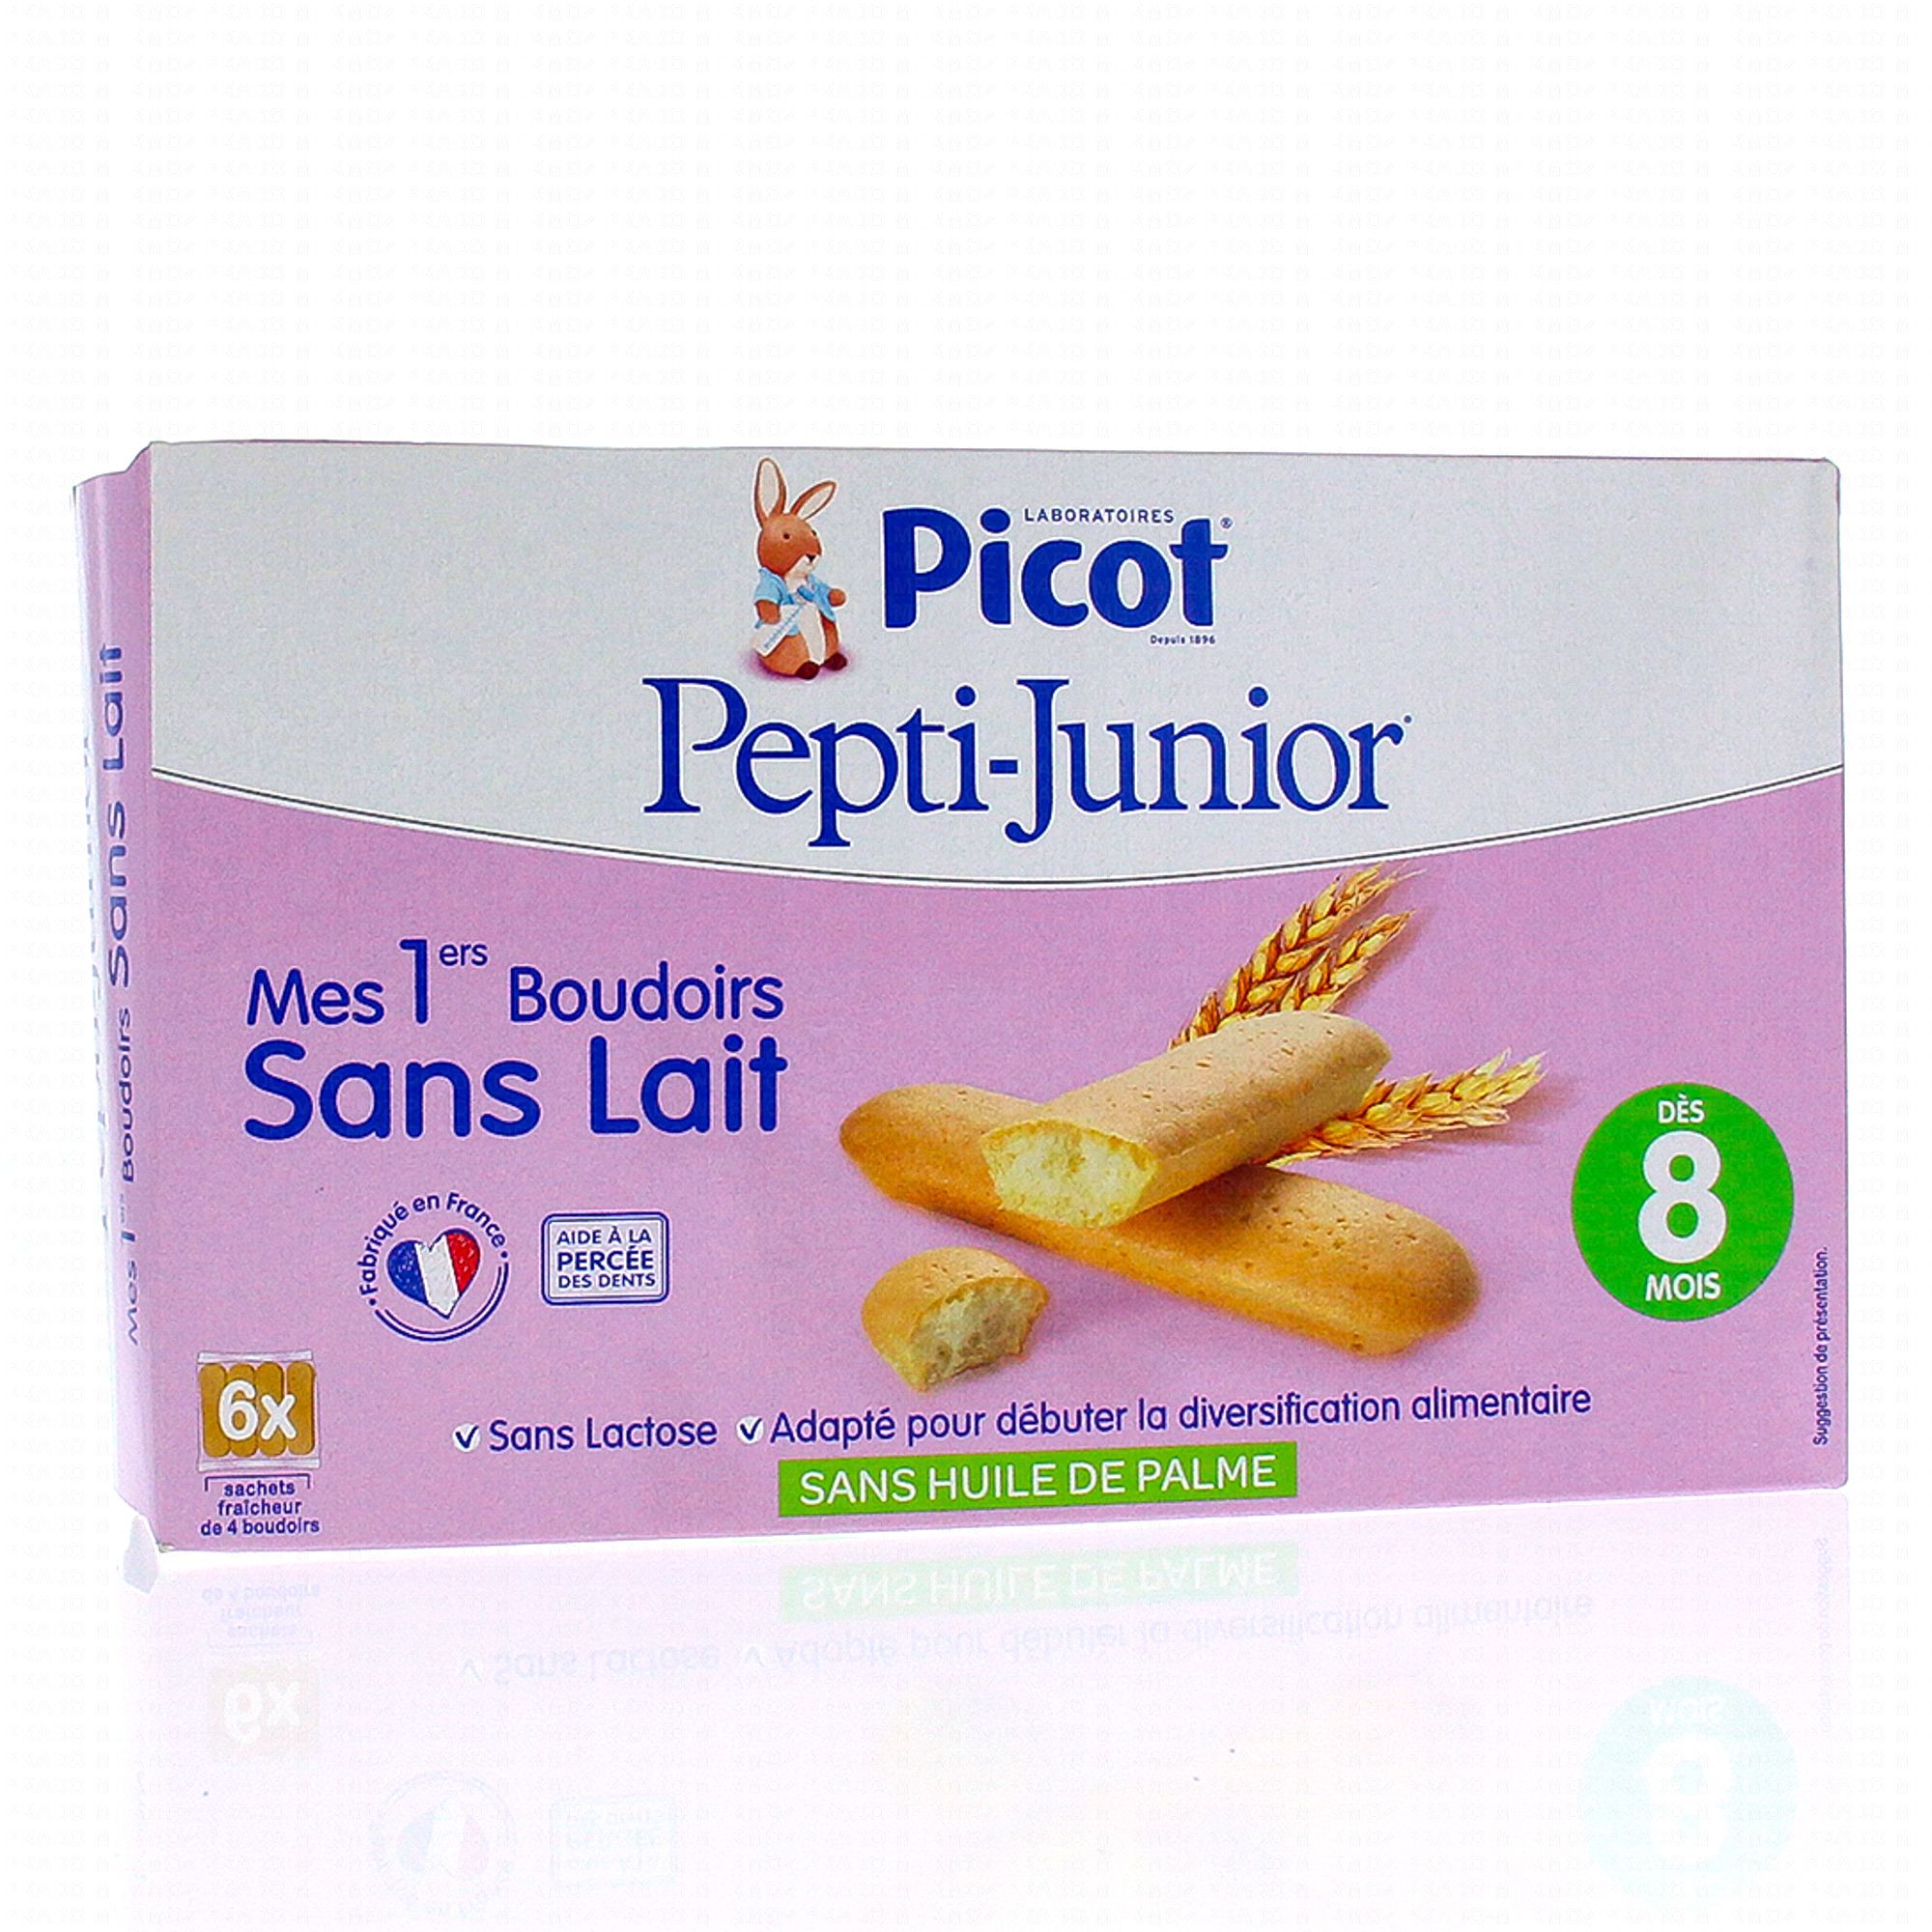 PICOT Pepti-junior- Mes 1ers boudoirs sans lait x6 sachets de 4 -  Parapharmacie Prado Mermoz